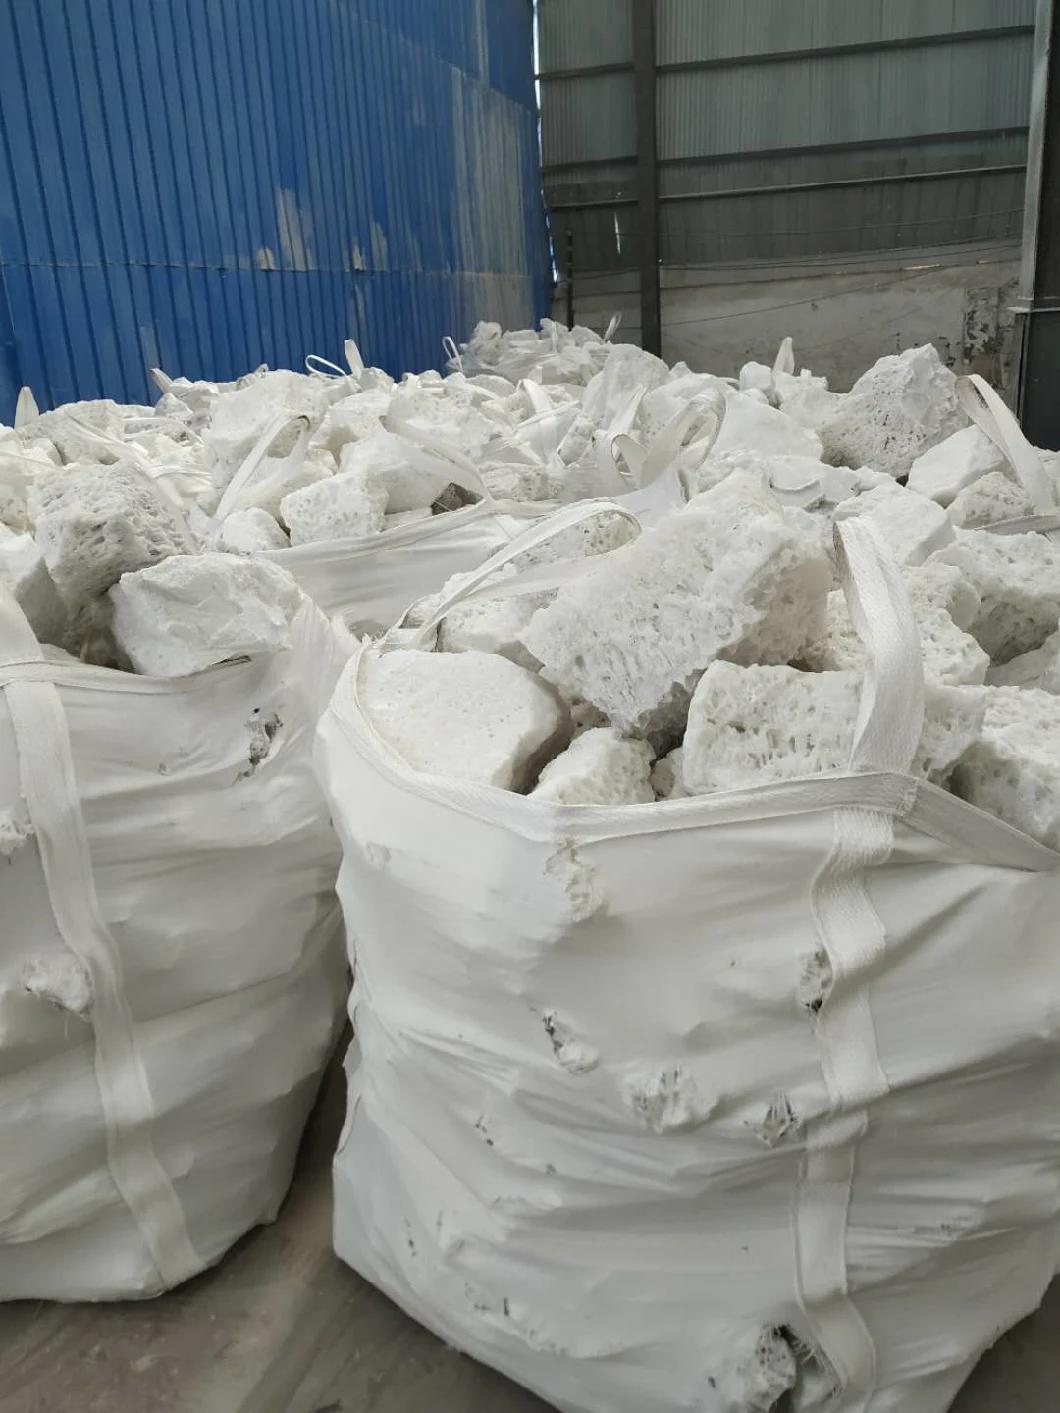 White Fused Corundum Powder/Aluminum Oxide Powder China Manufacture